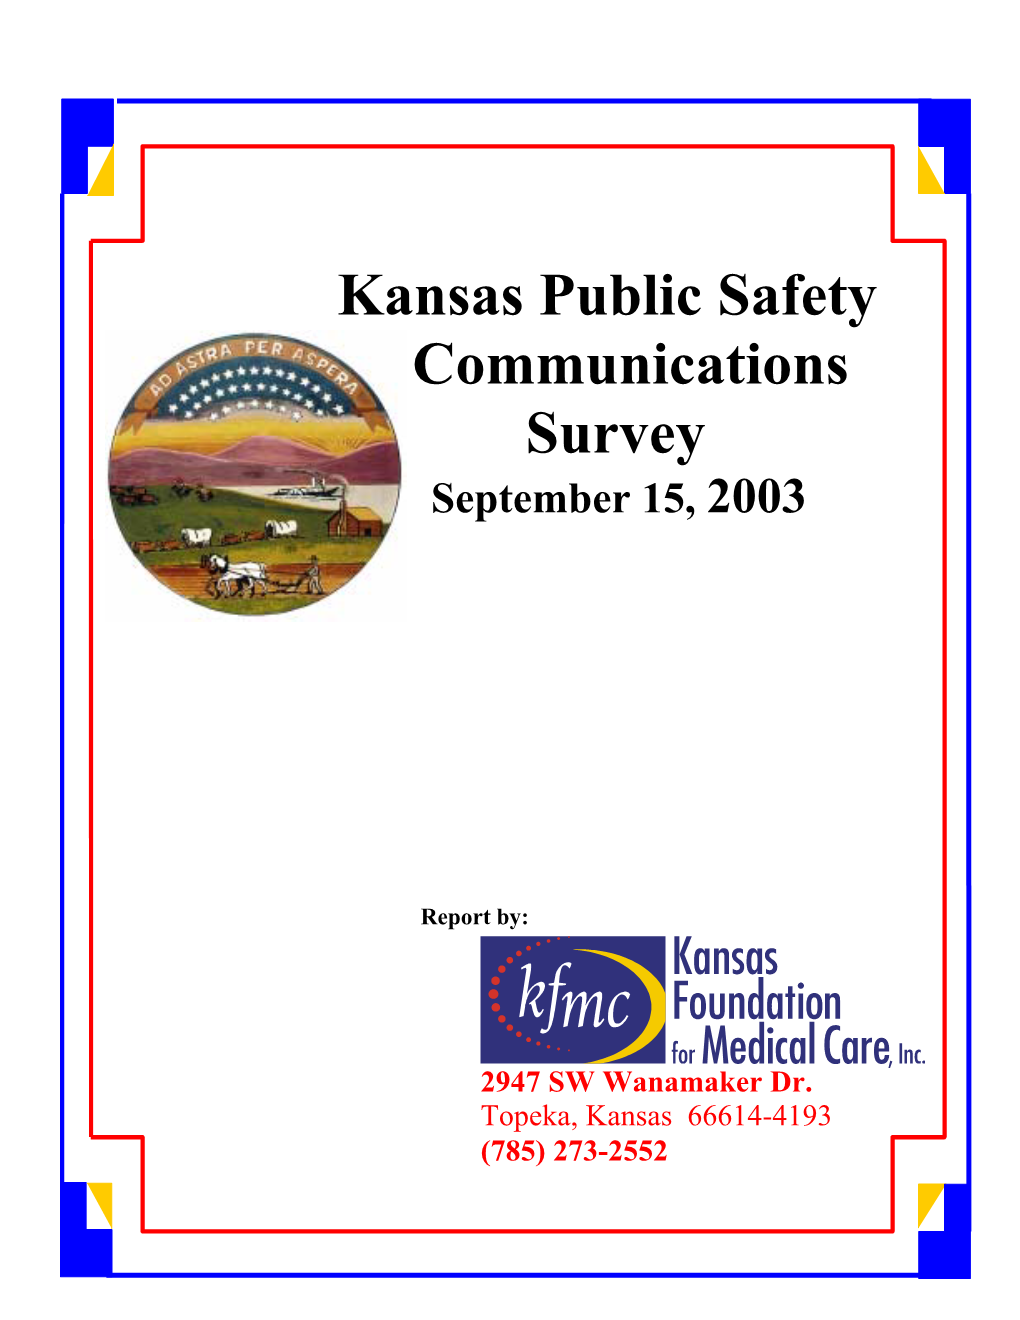 Kansas Public Safety Communications Survey September 15, 2003